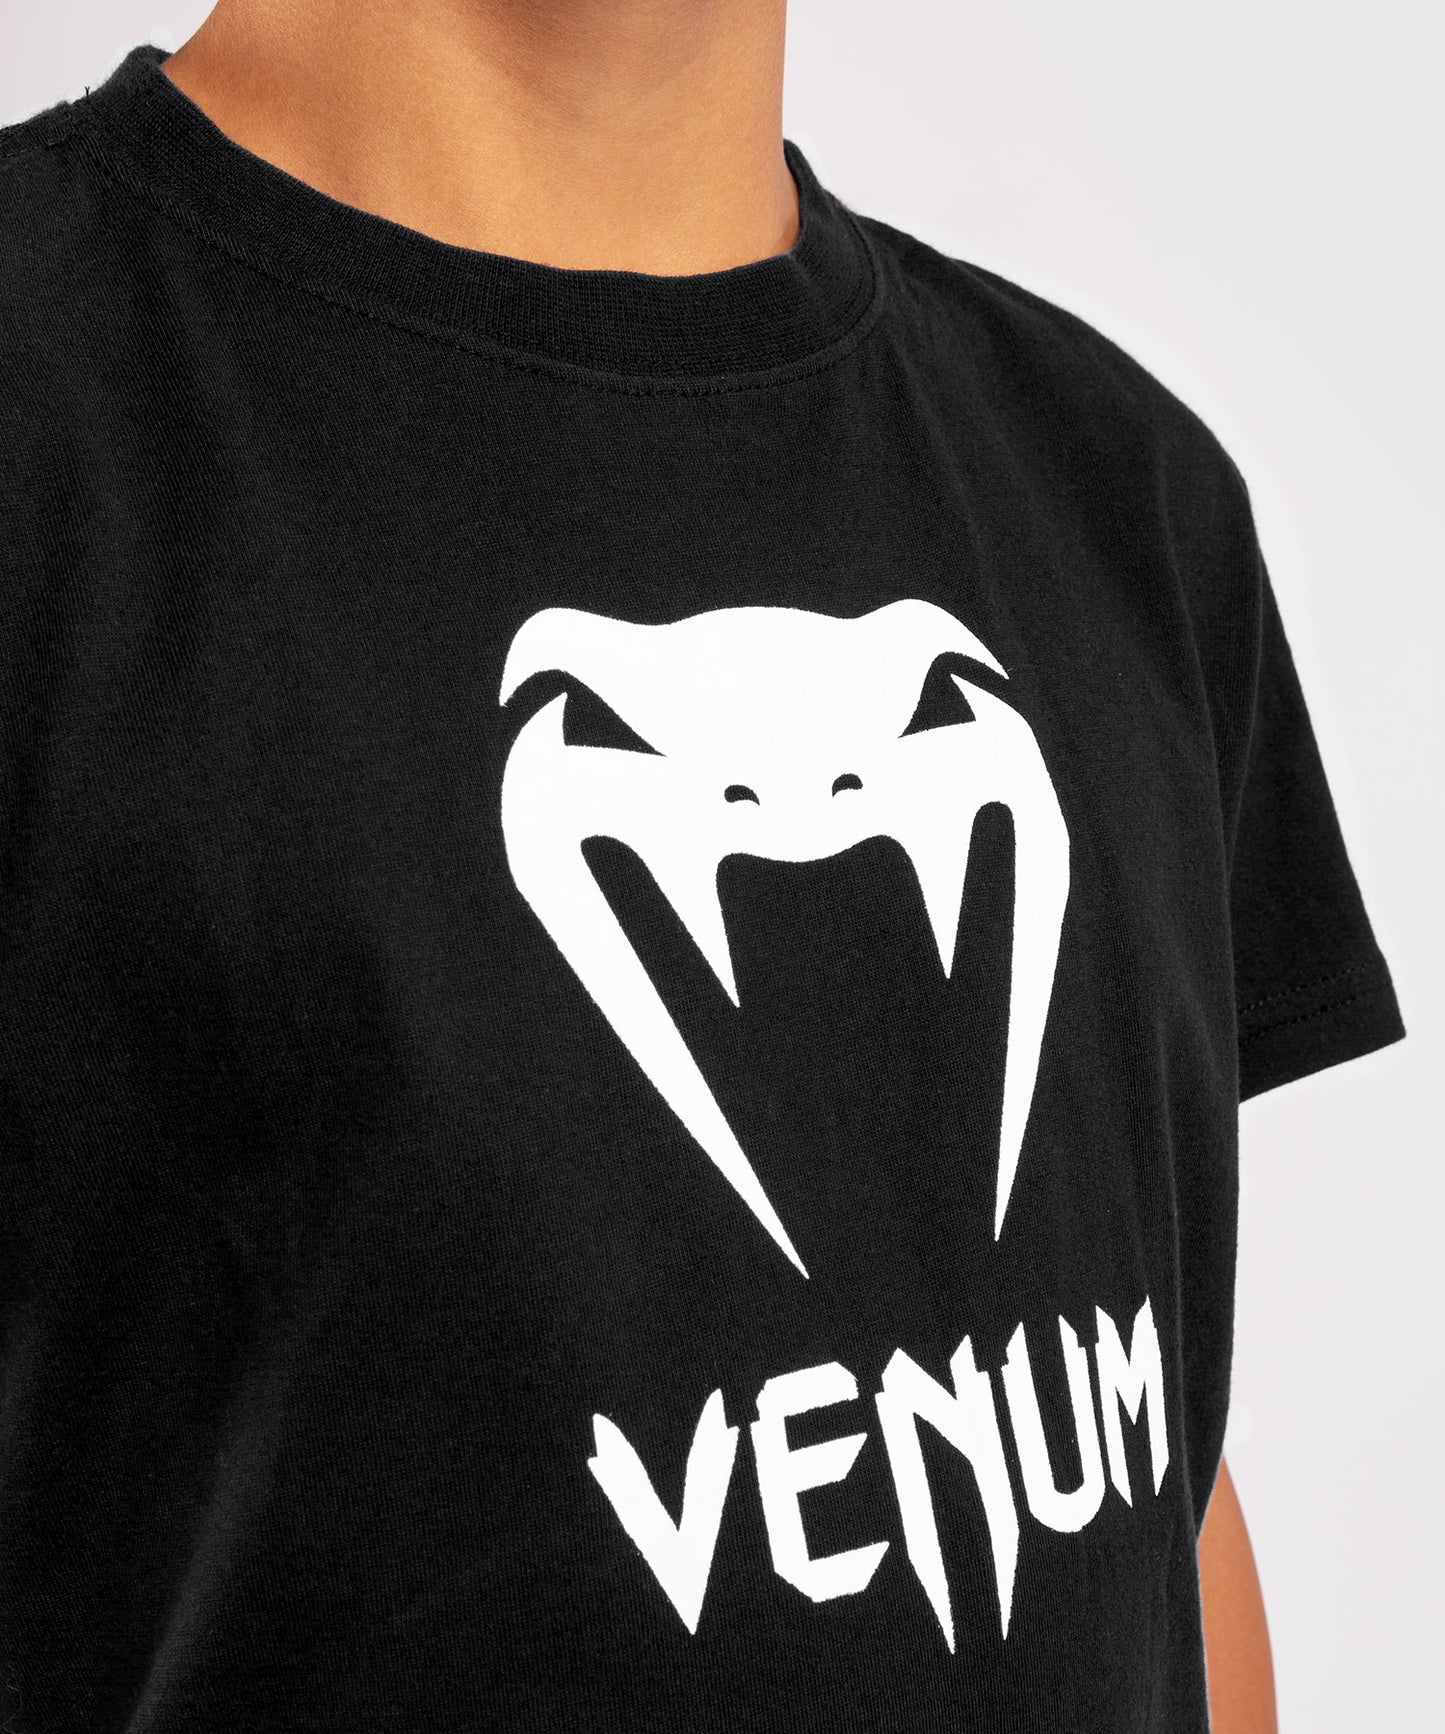 Venum Classic T-shirt - Kids - Black